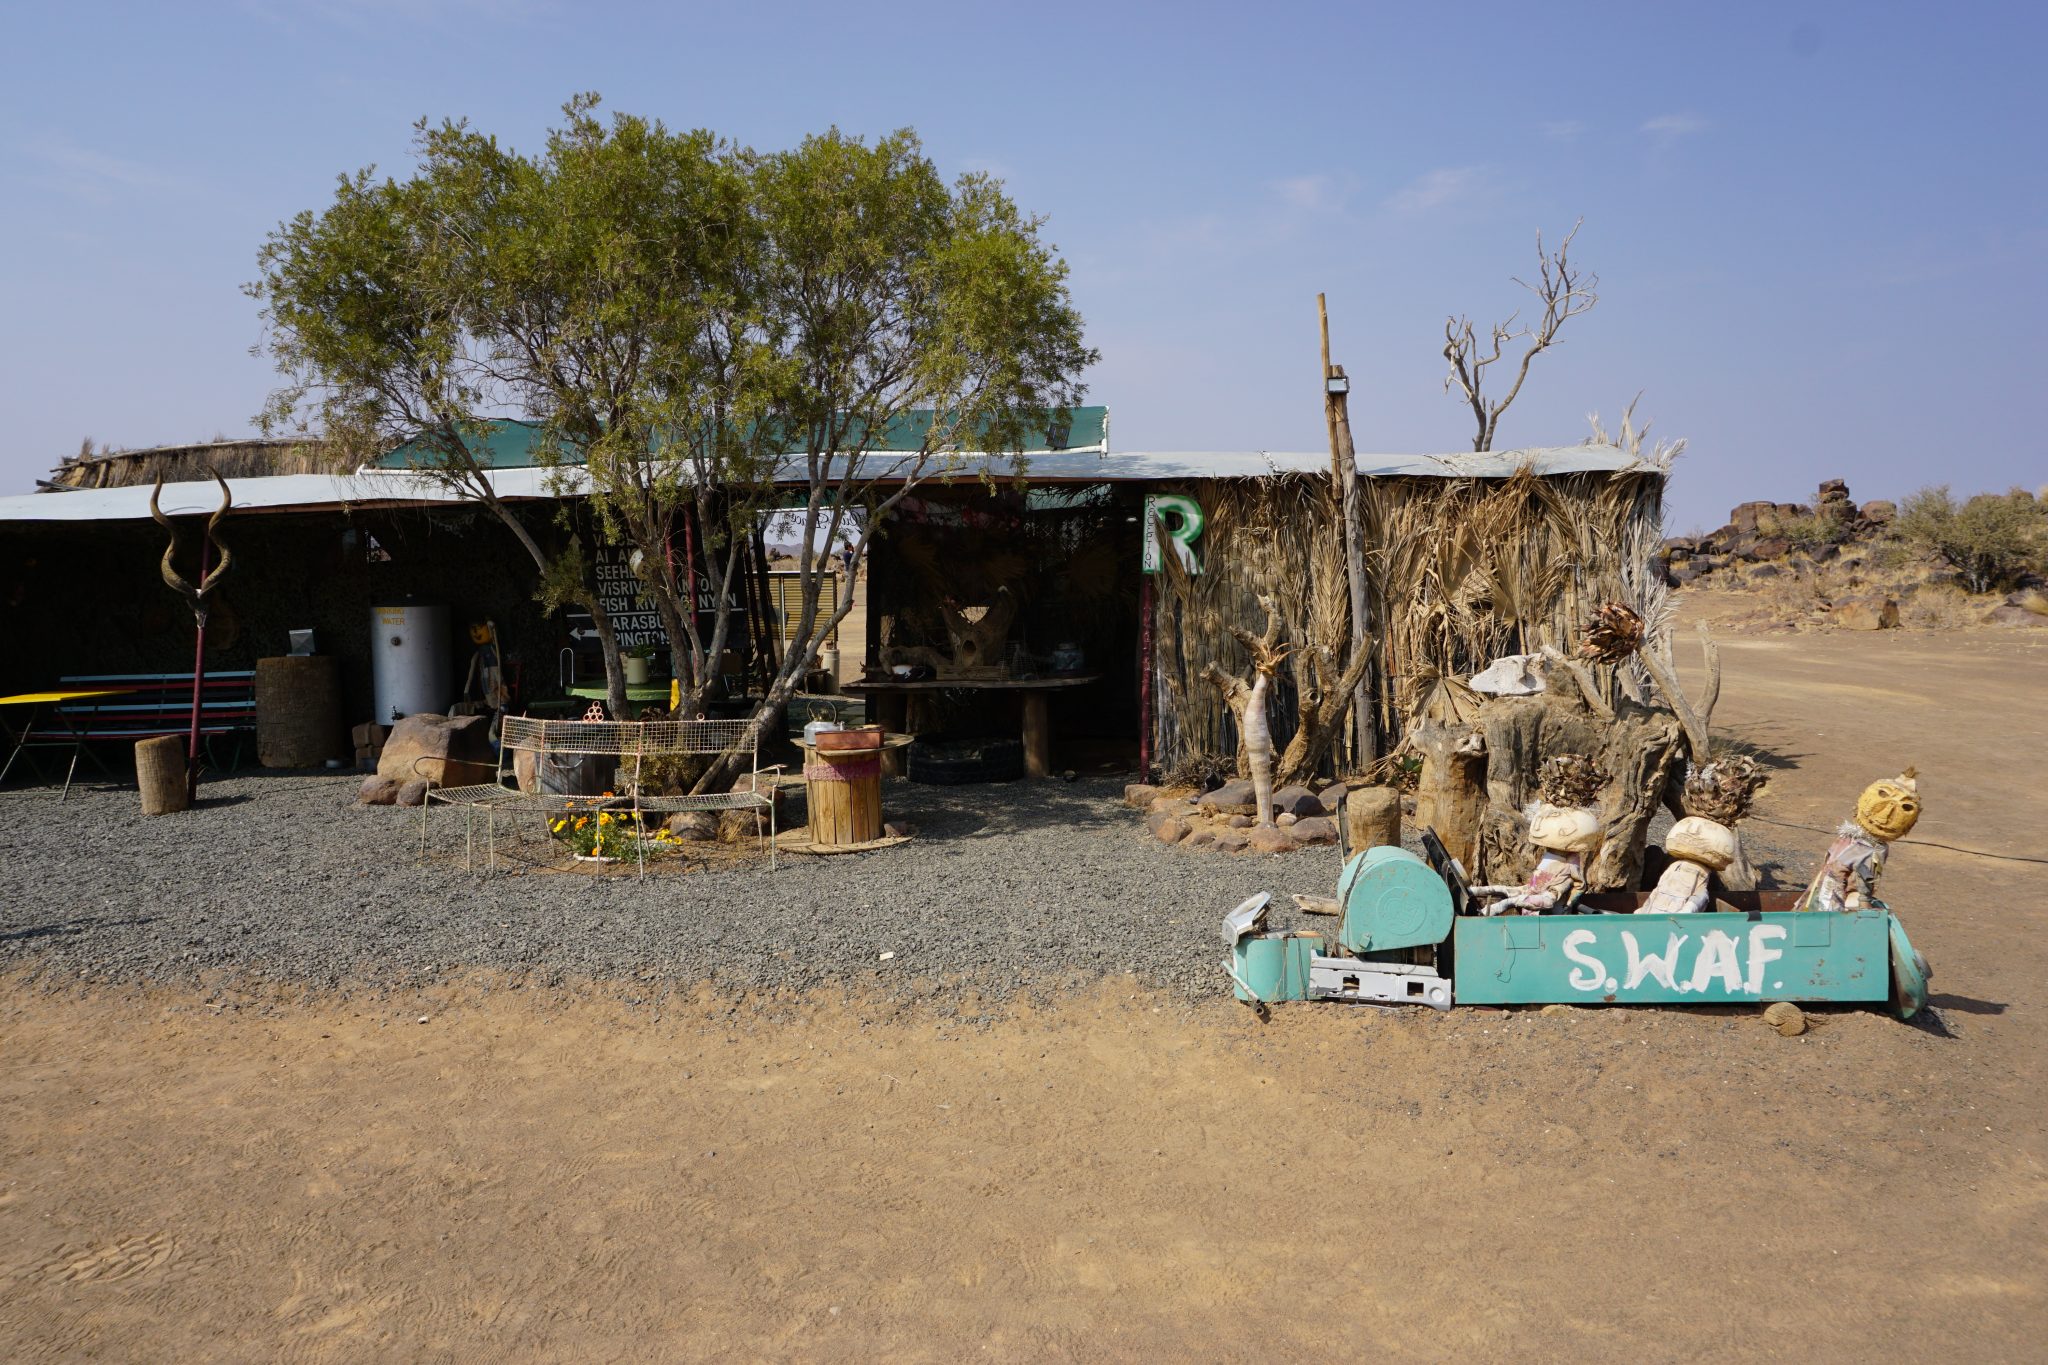 Namibia Reise: Unsere erste Campsite